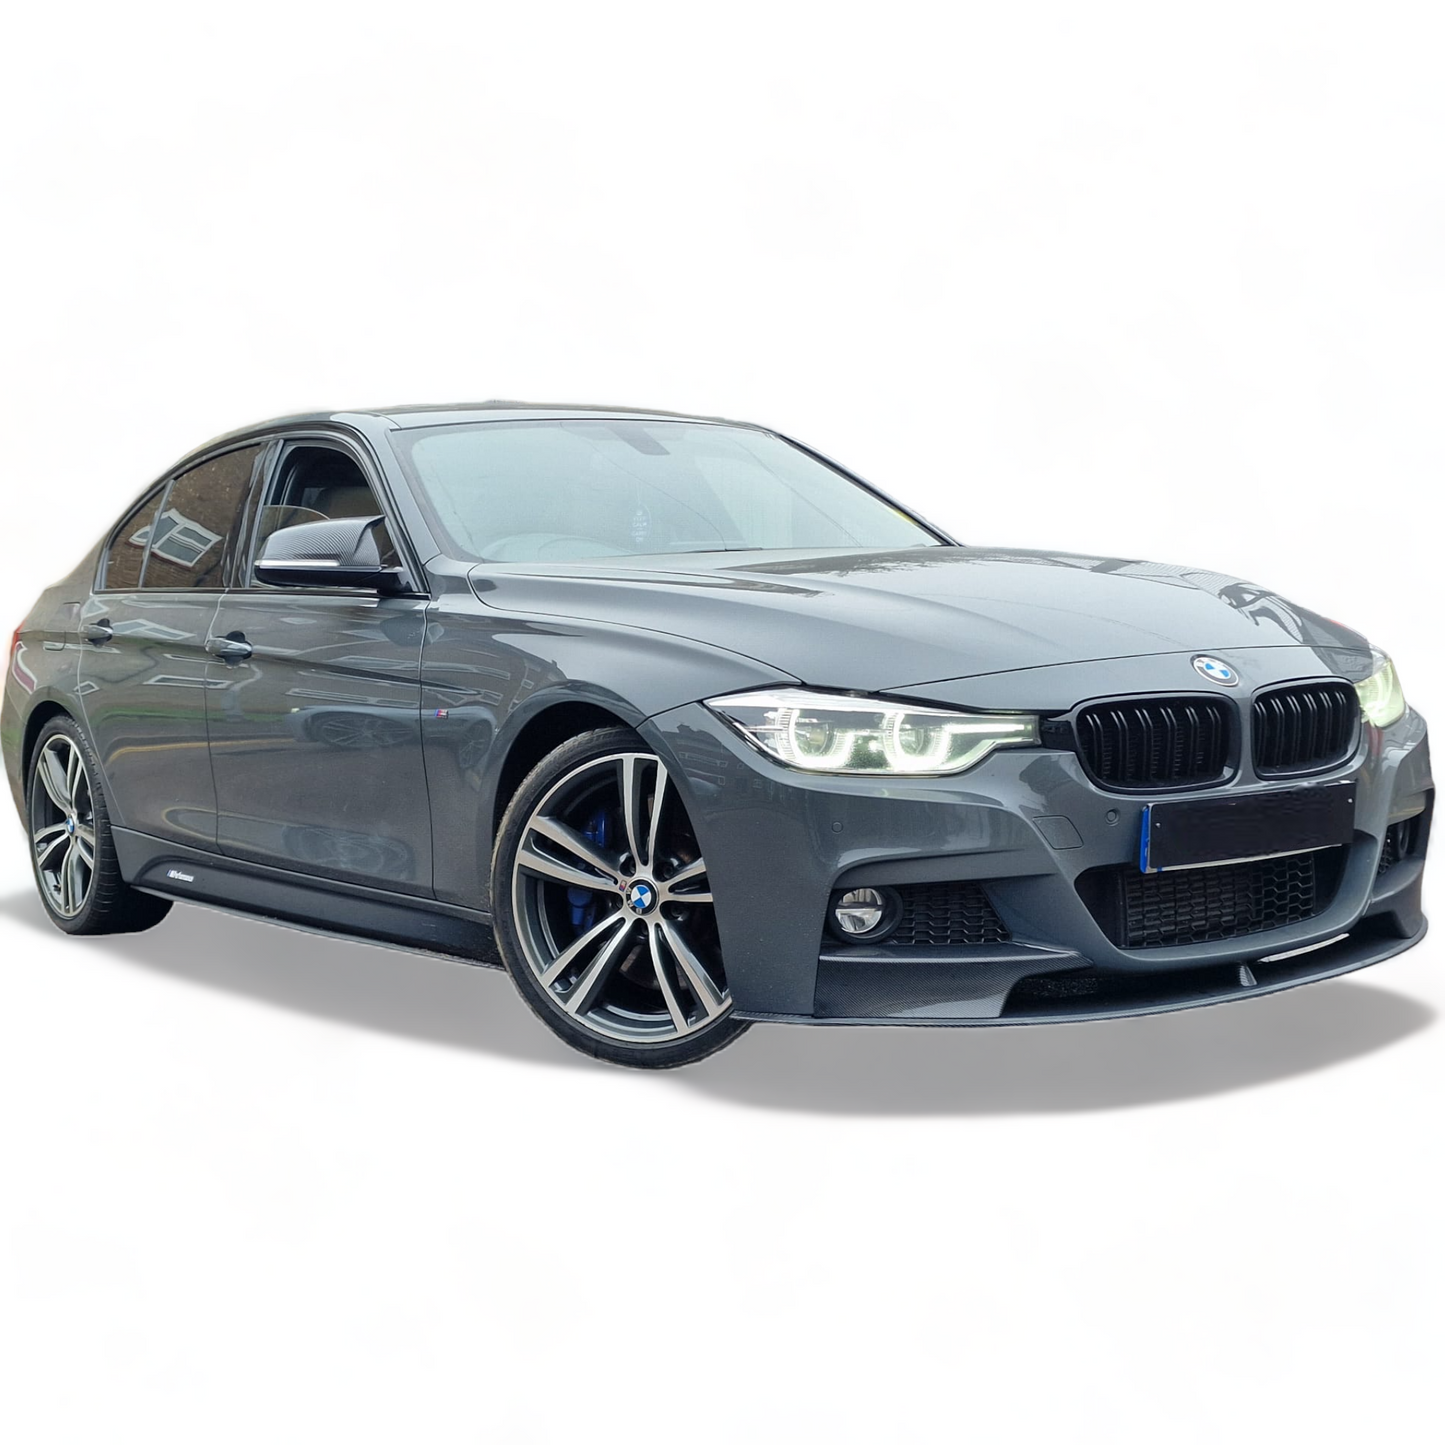 BMW3 Series F30 kit carbon performance styling full body kit